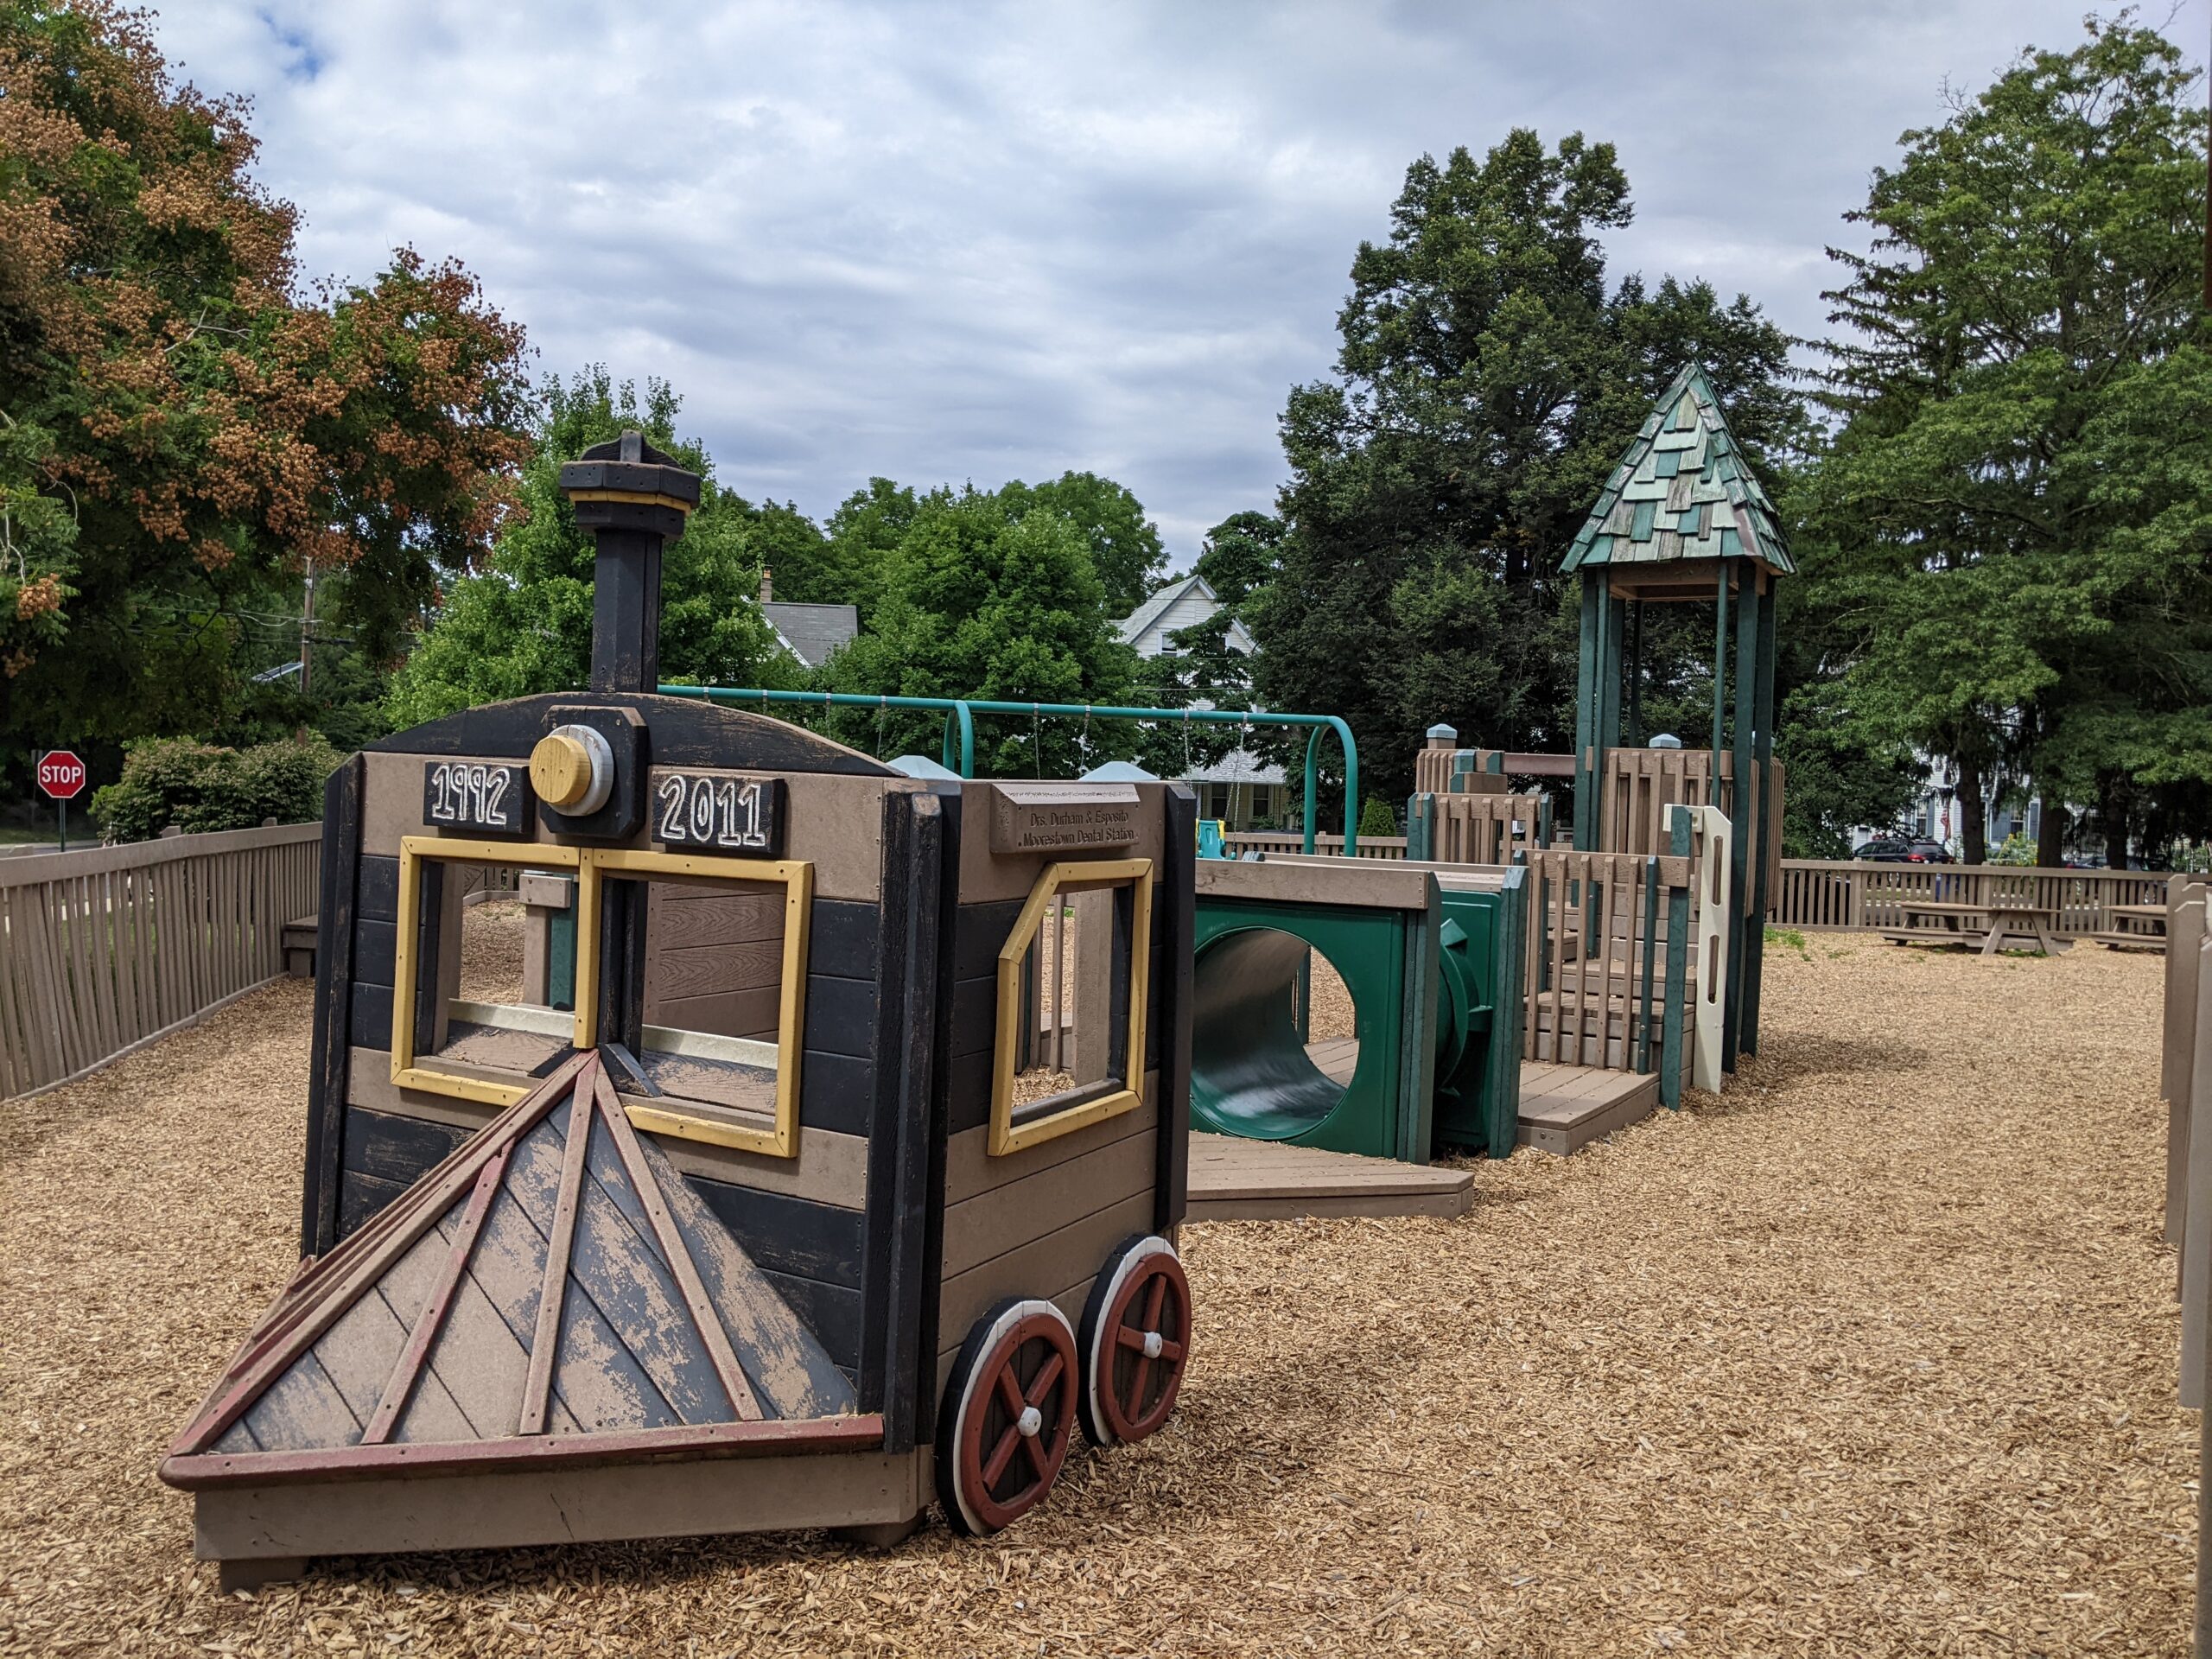 Frank Fullerton Memorial Park Playground in Moorestown NJ - FEATURES - Train at preschool Playground WIDE image